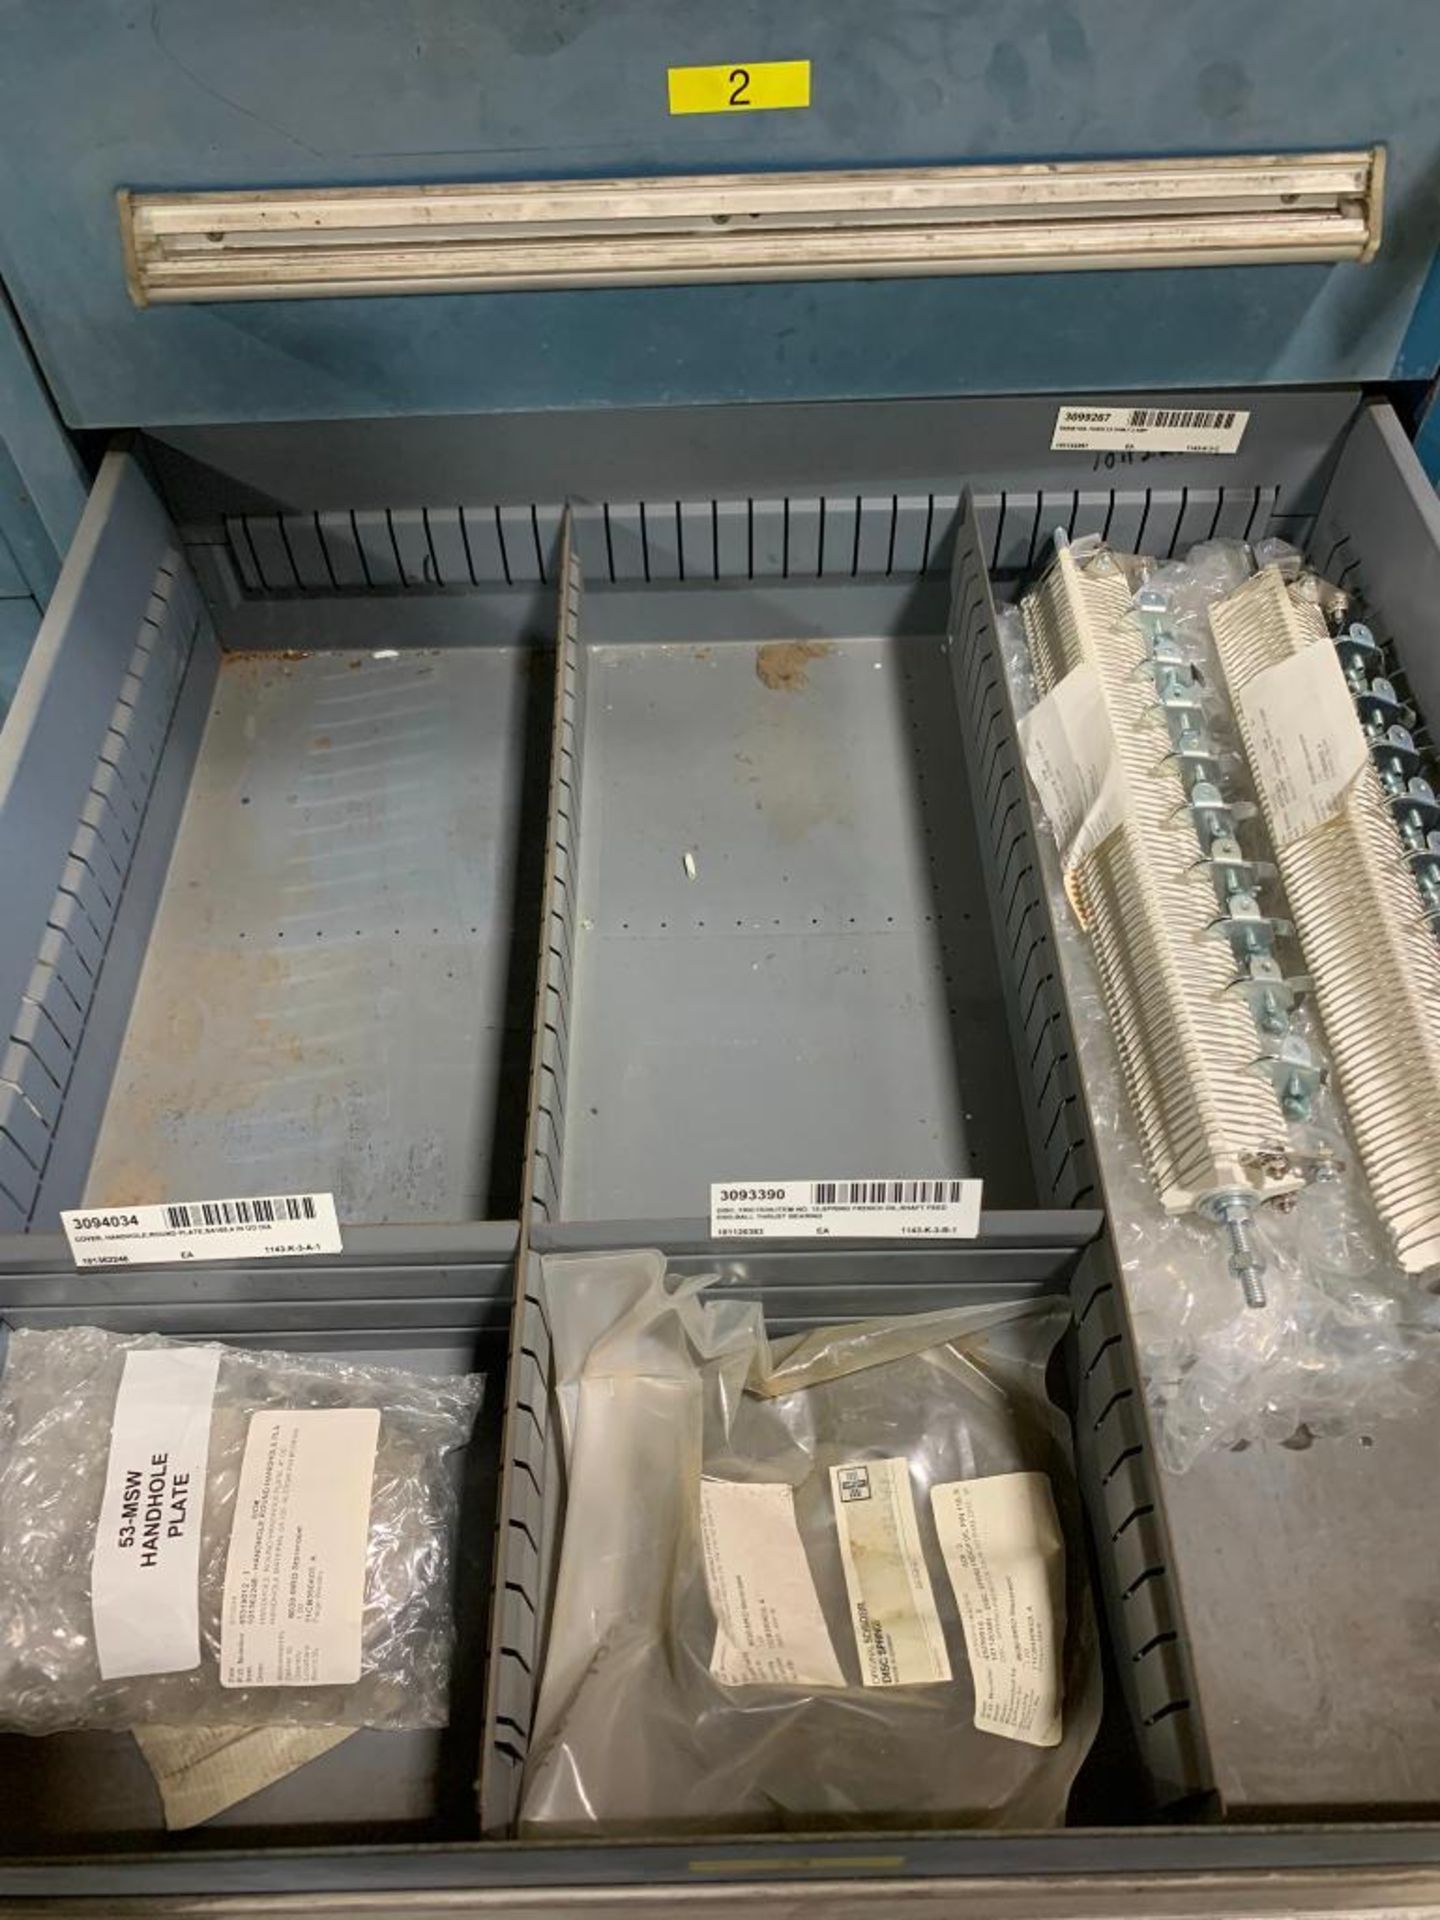 Stanley Vidmar 7-Drawer Cabinet w/ Pneumatic & Hydraulic Valves, Resistors, Handhole Plates, Manifol - Image 4 of 8